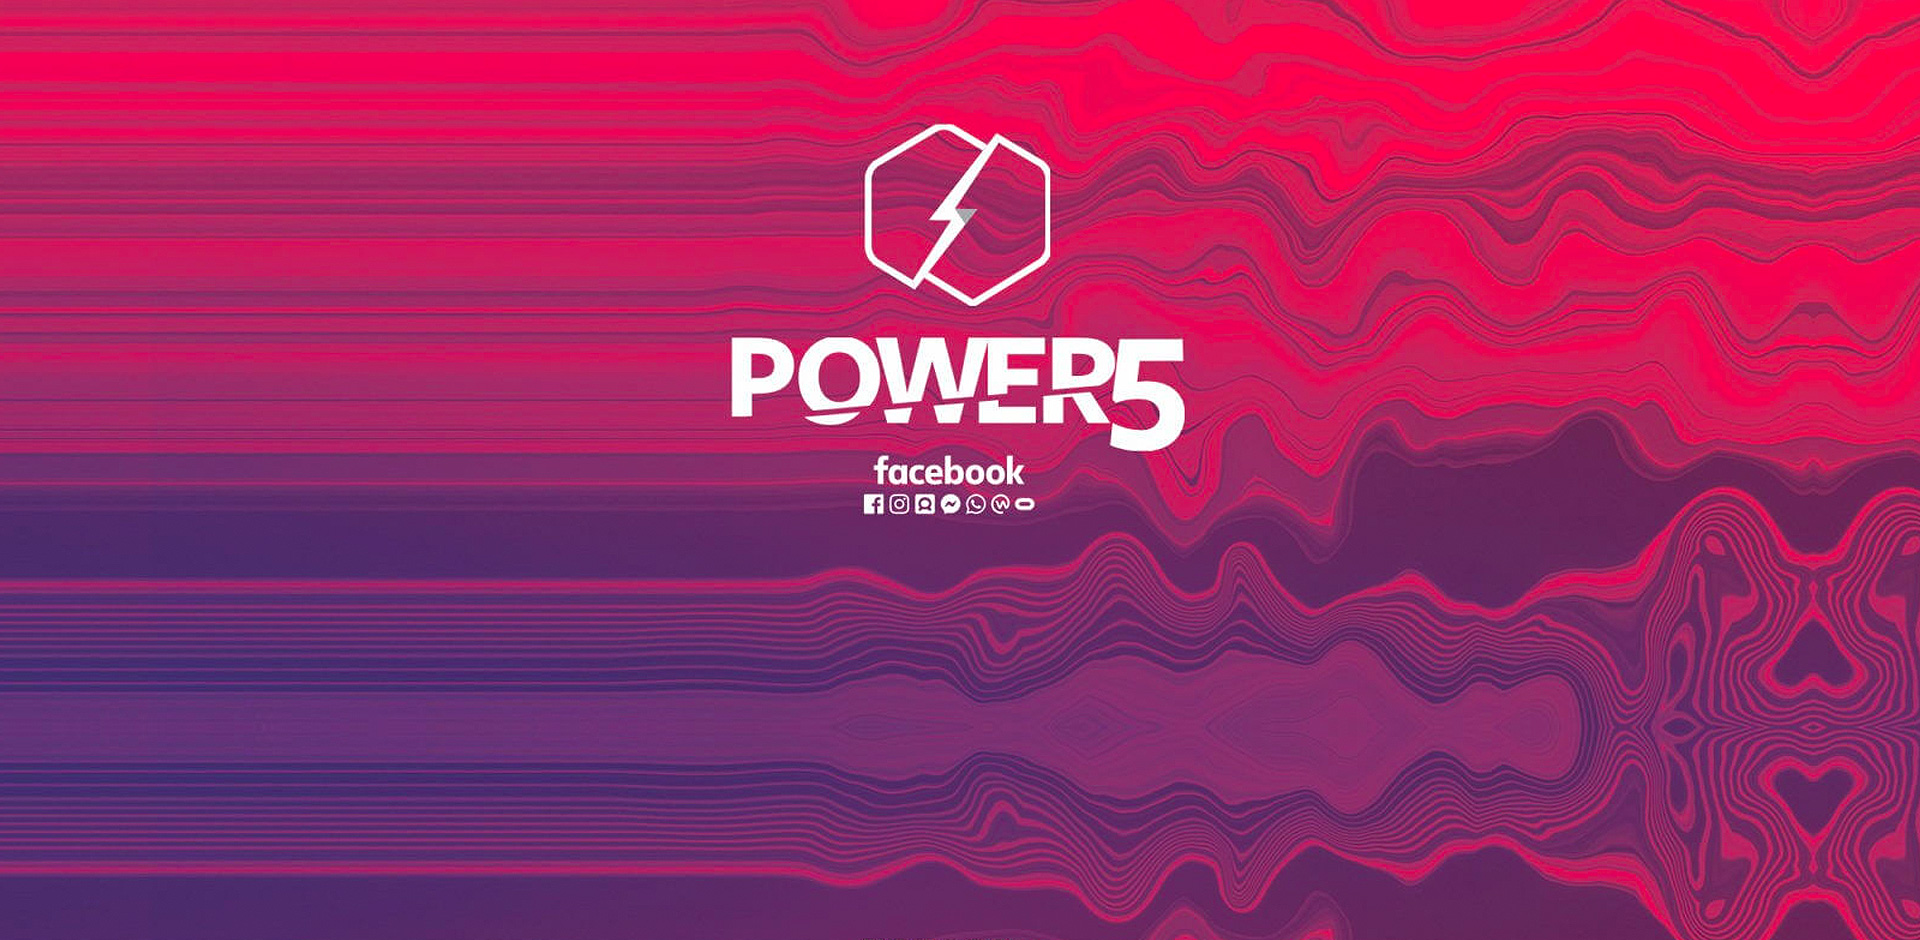 Facebook Power5: New Best Practices for Facebook Advertising in 2019